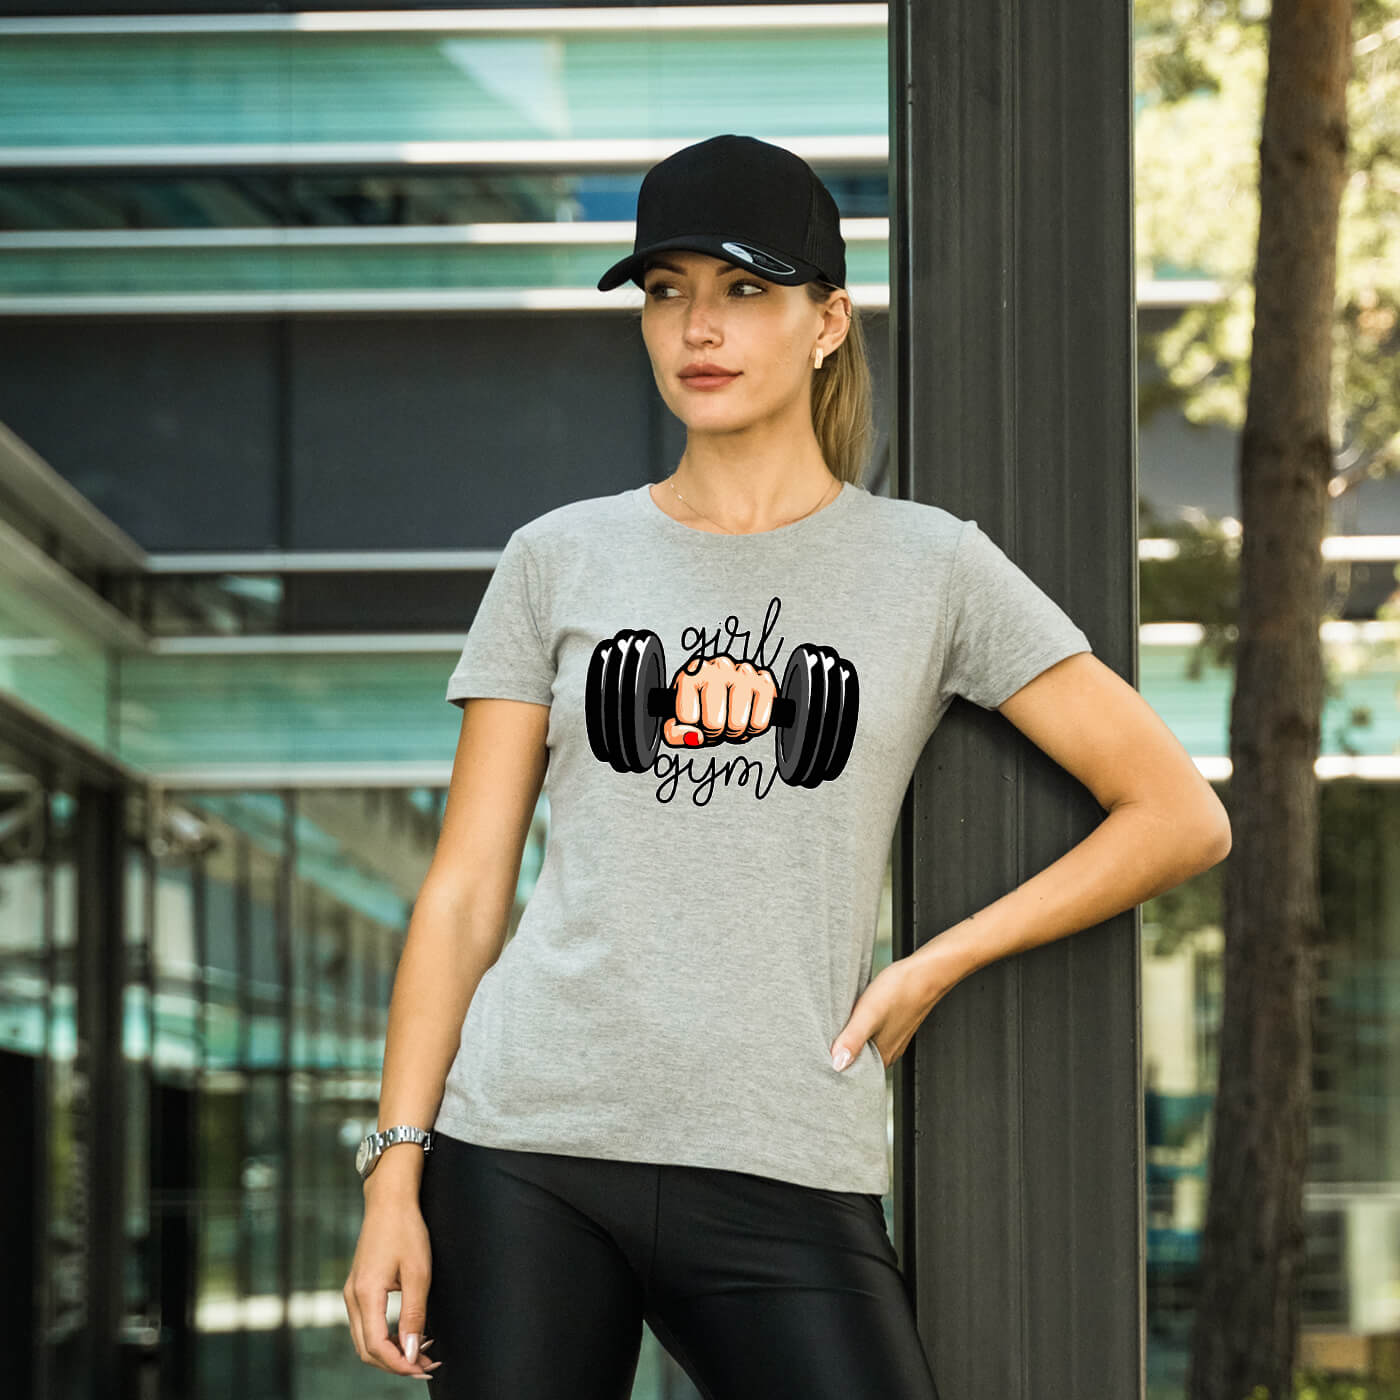 https://vivamake.com/wp-content/uploads/2020/11/grey-women-tshirt-with-print-girl-gym.jpg